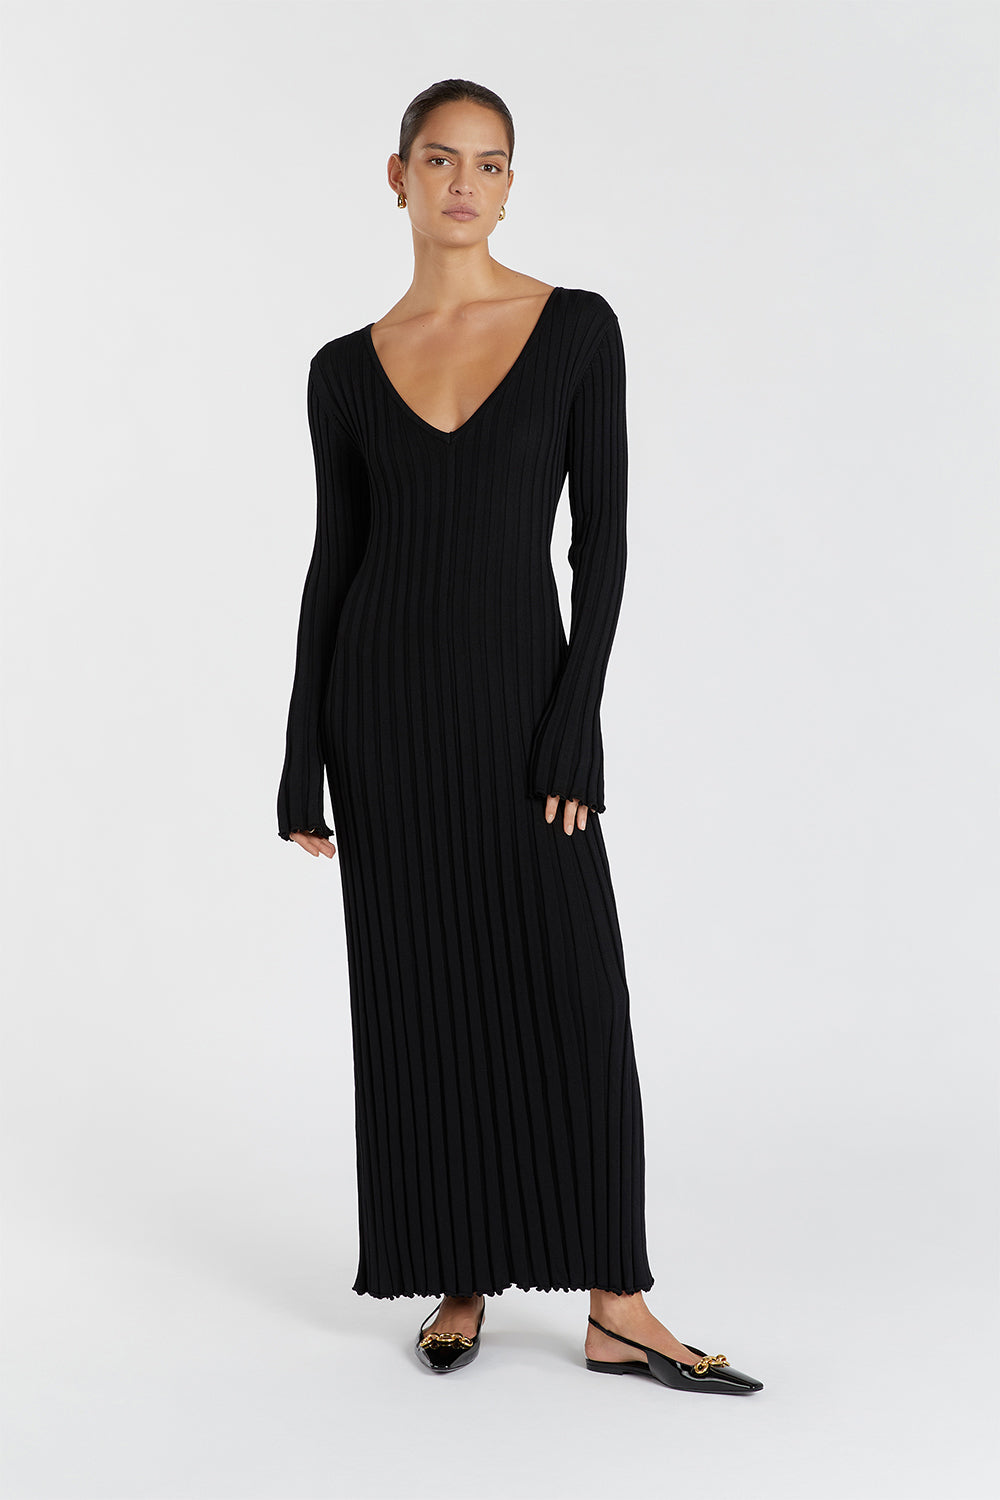 Black Ribbed Dress - Mini Sweater Dress - Long Sleeve Dress - Lulus